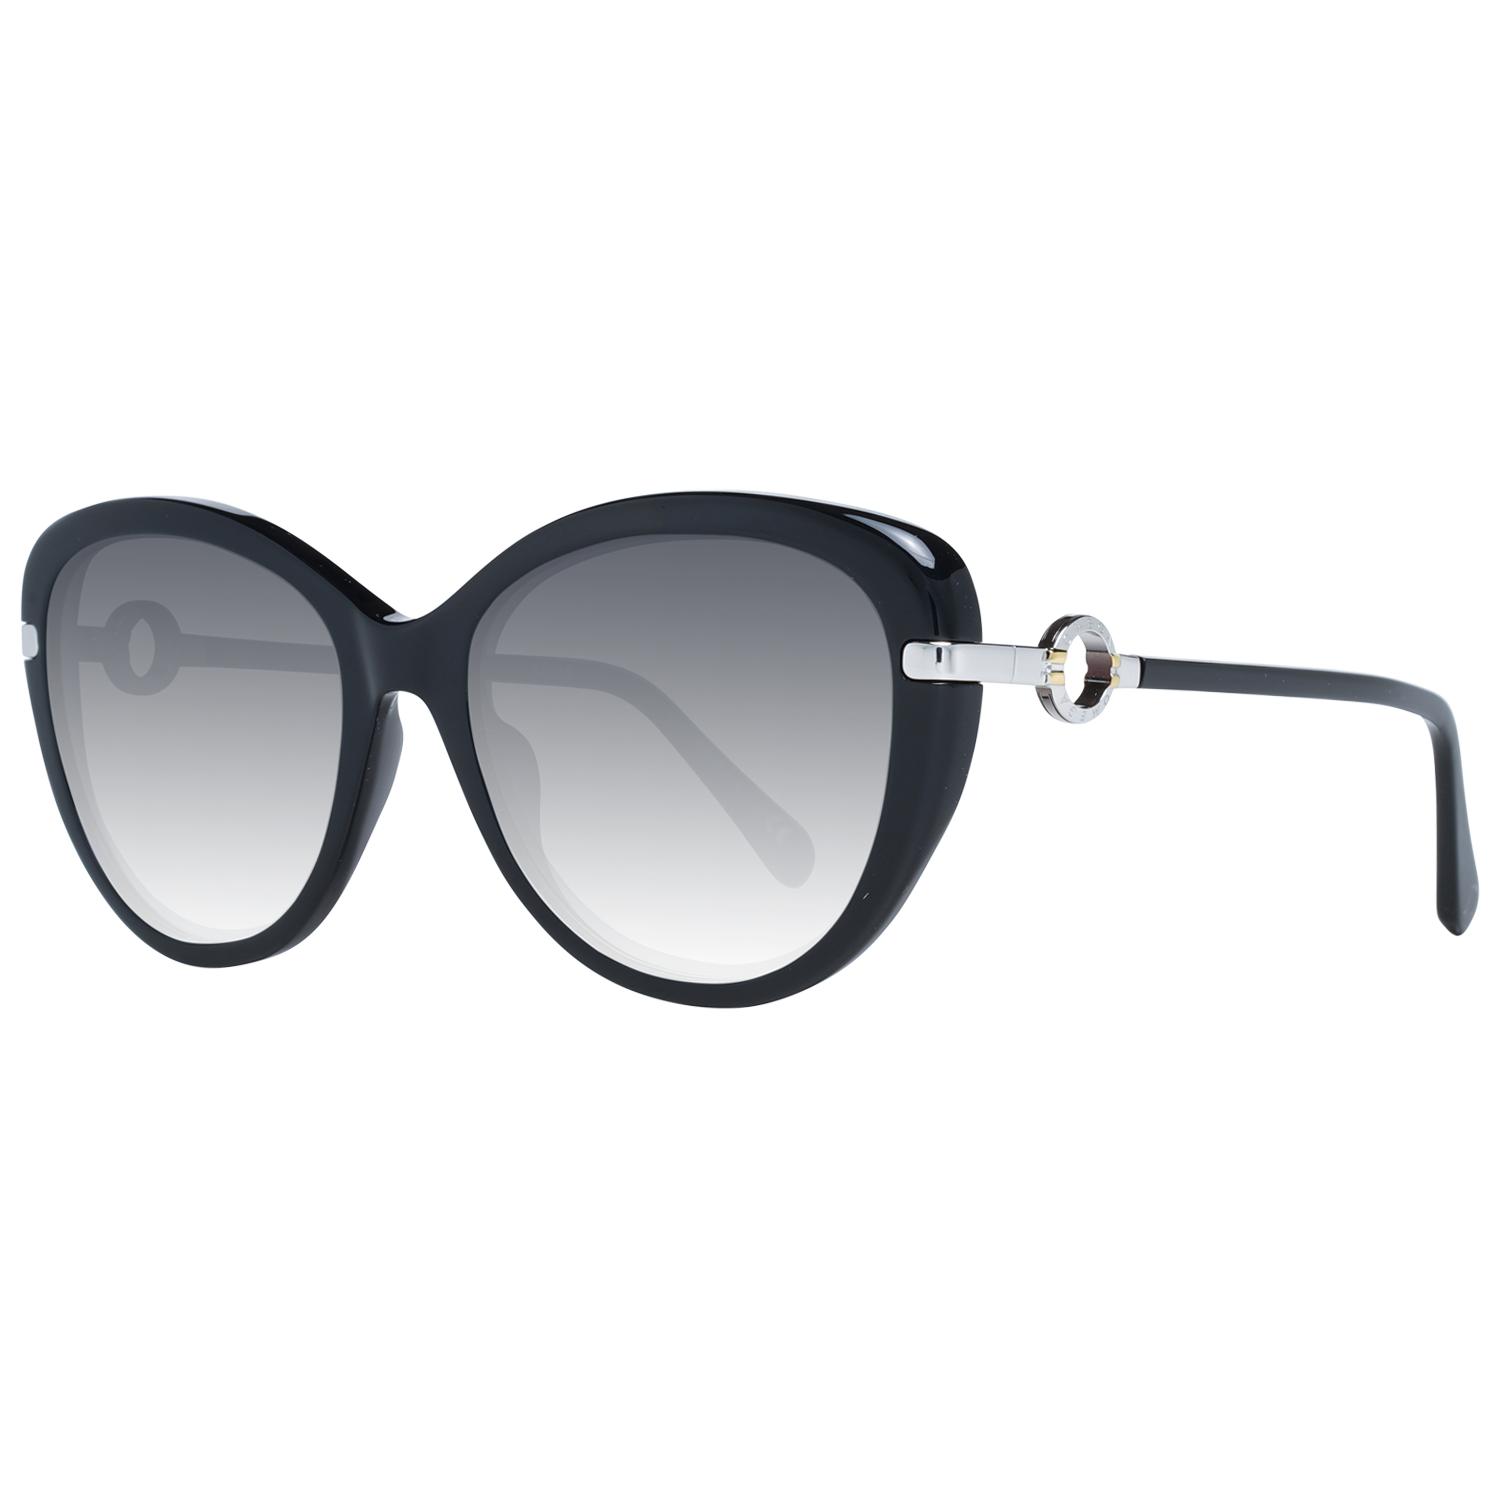 OMW Round Sunglasses, Black & Grey